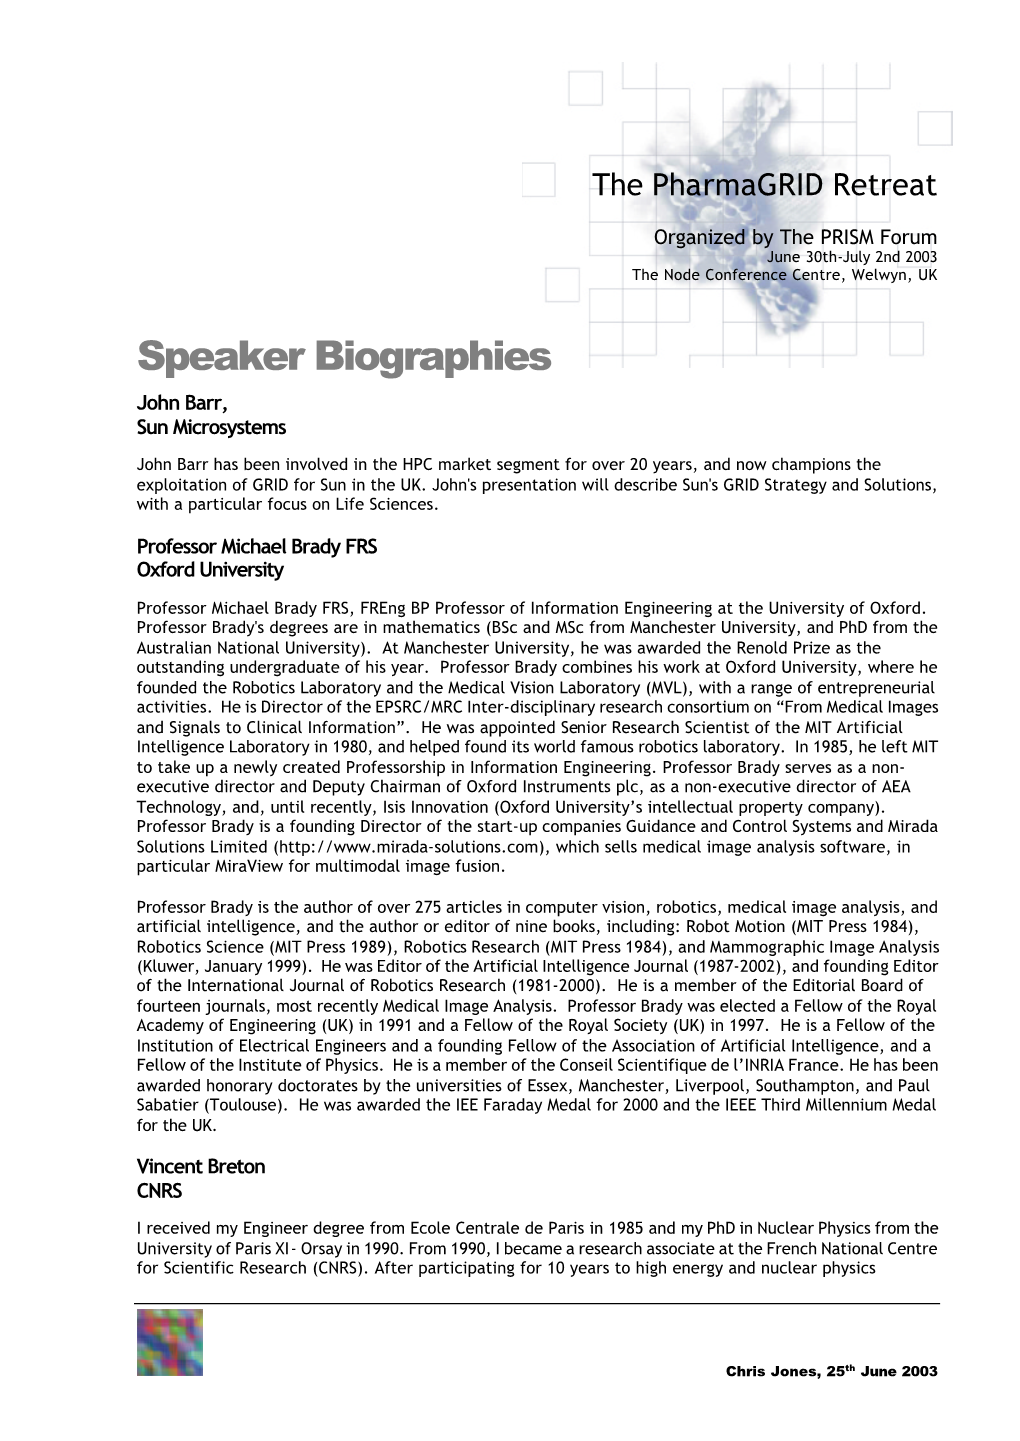 Speaker Biographies John Barr, Sun Microsystems